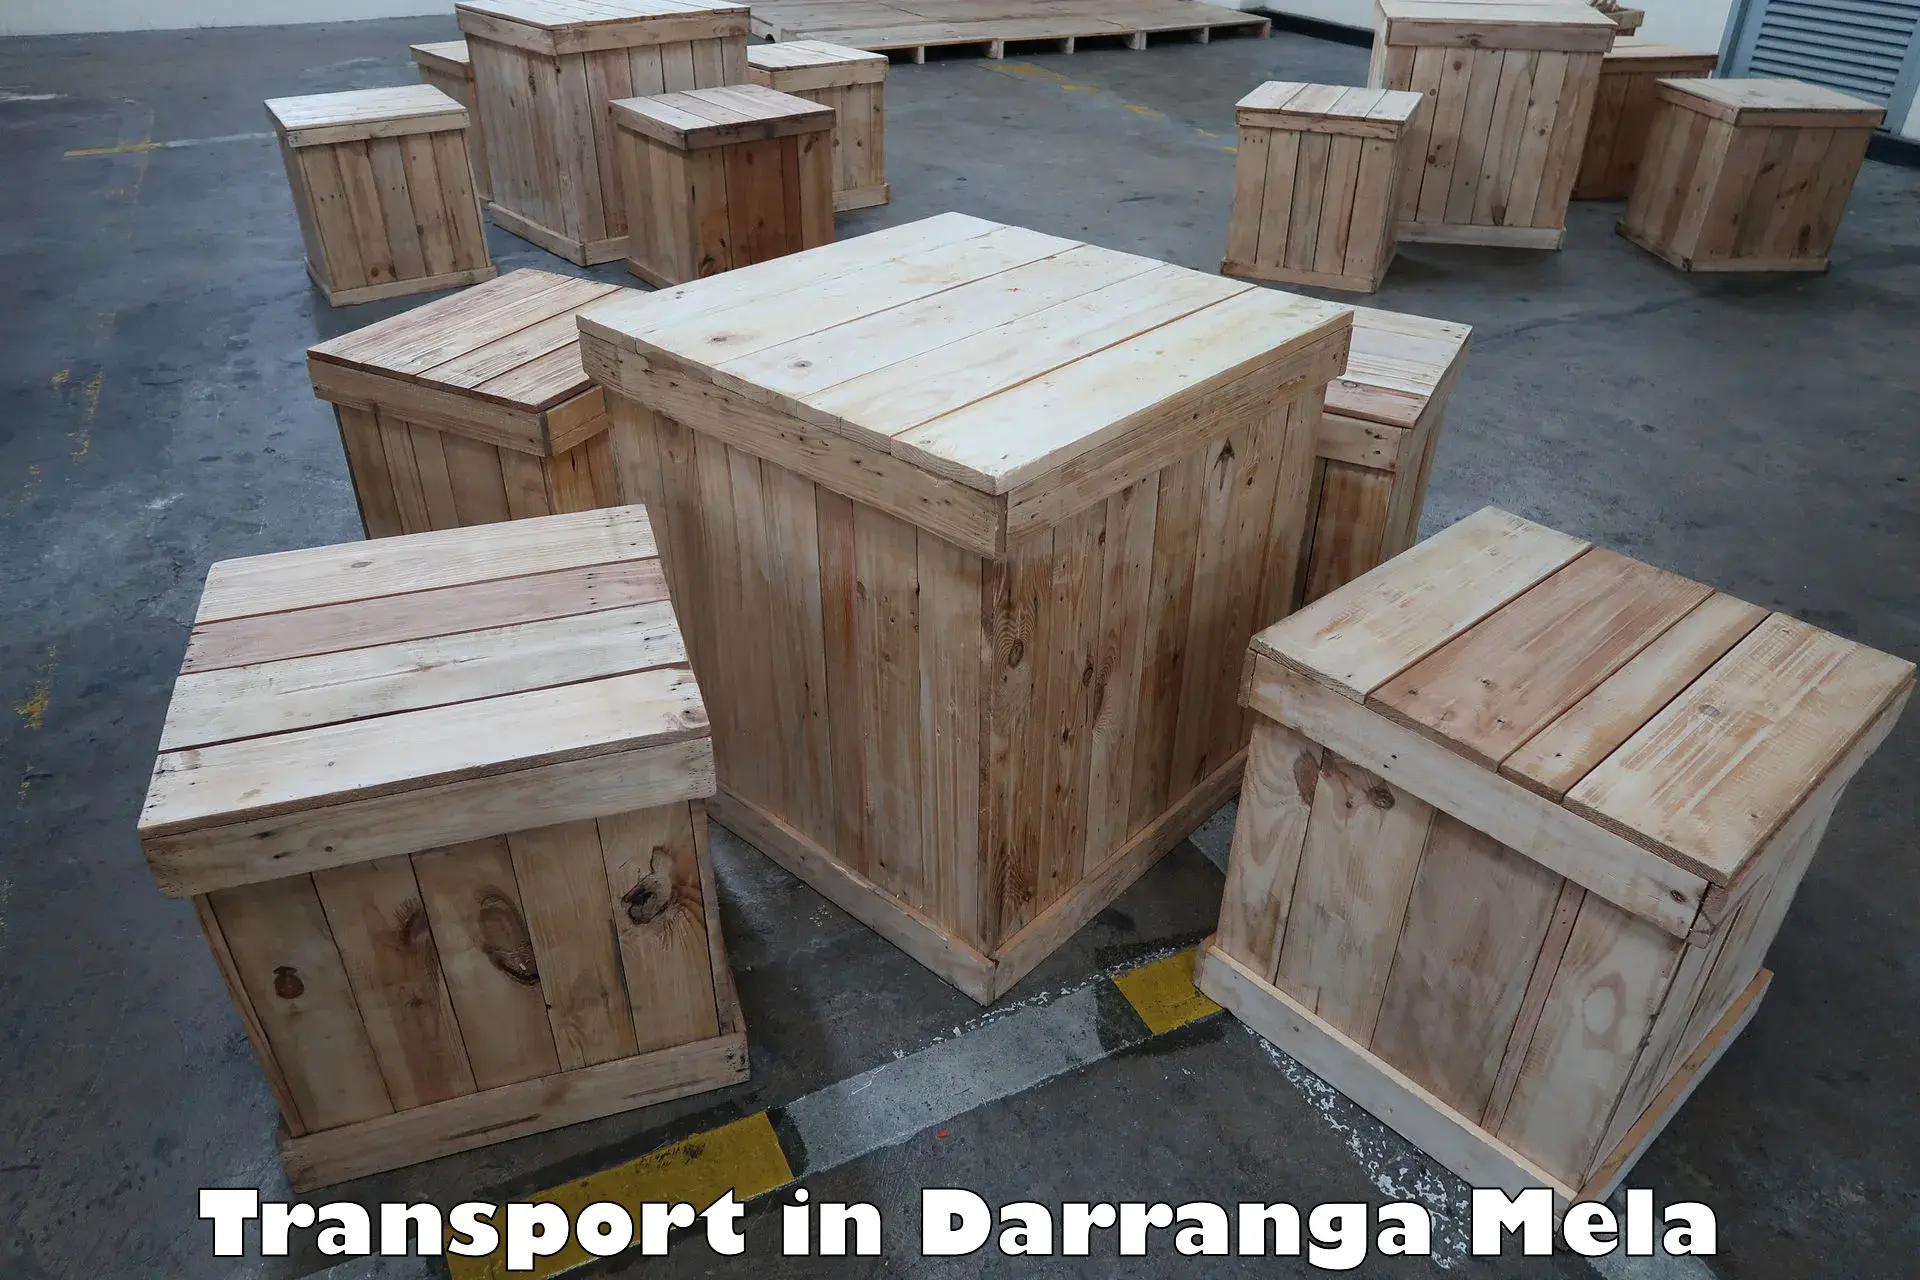 Cargo transport services in Darranga Mela